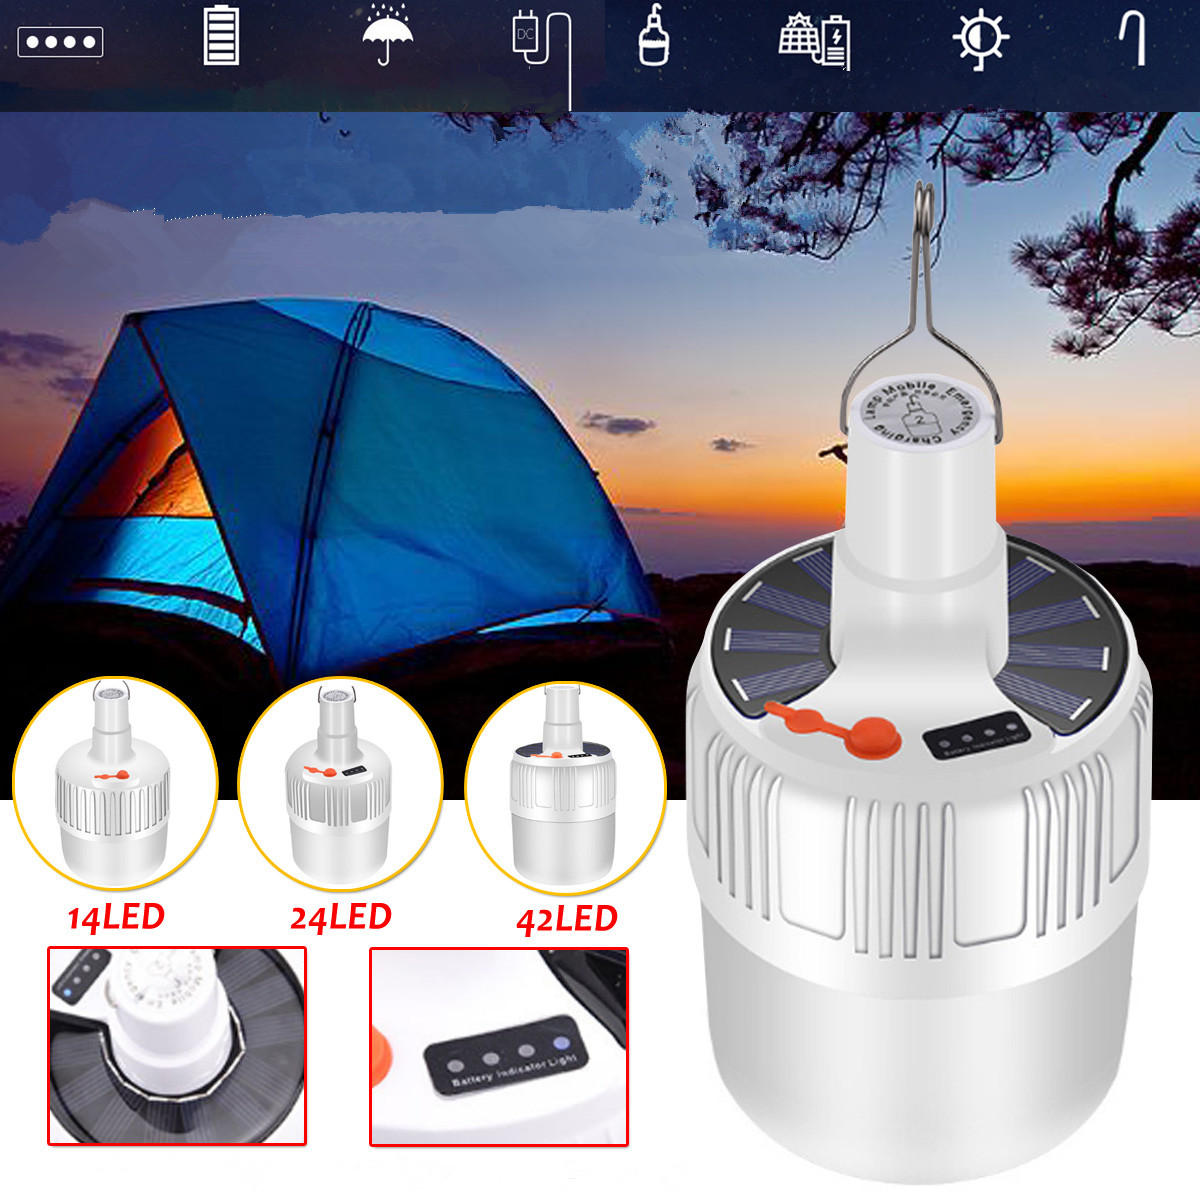 V led camping lights